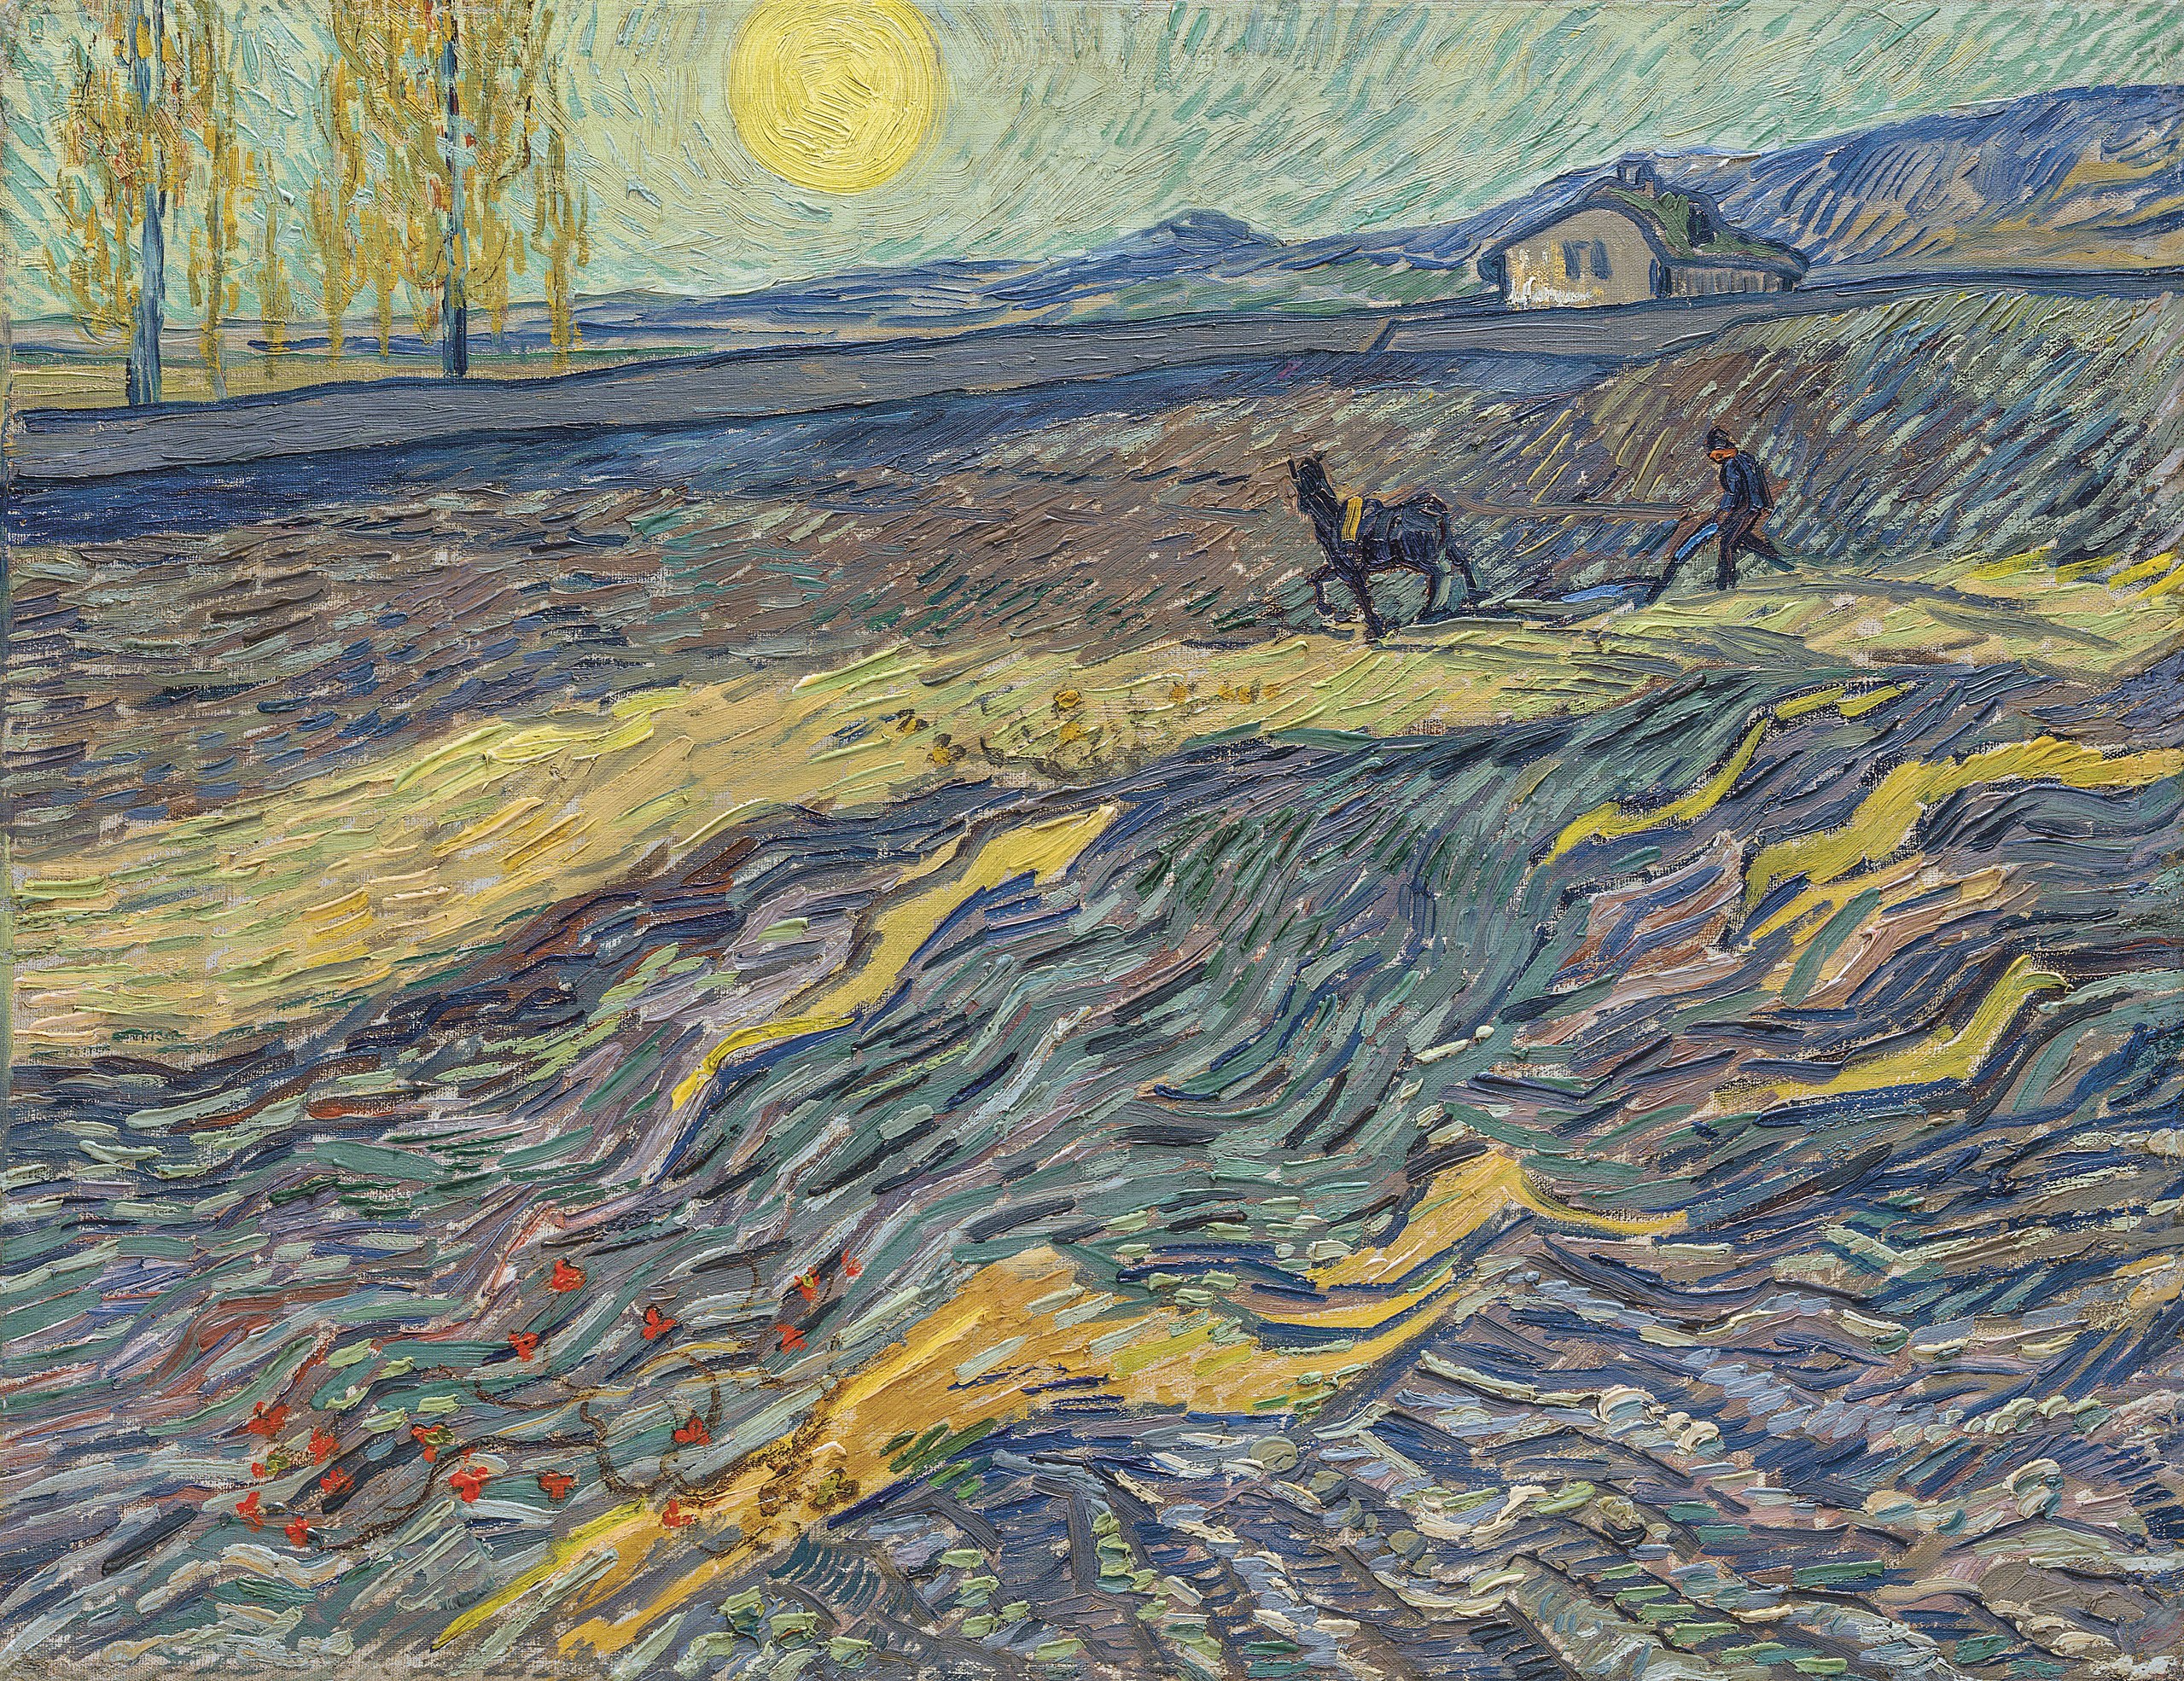 田間勞動者 by Vincent van Gogh - 1889 - 50.3 x 64.9 cm 